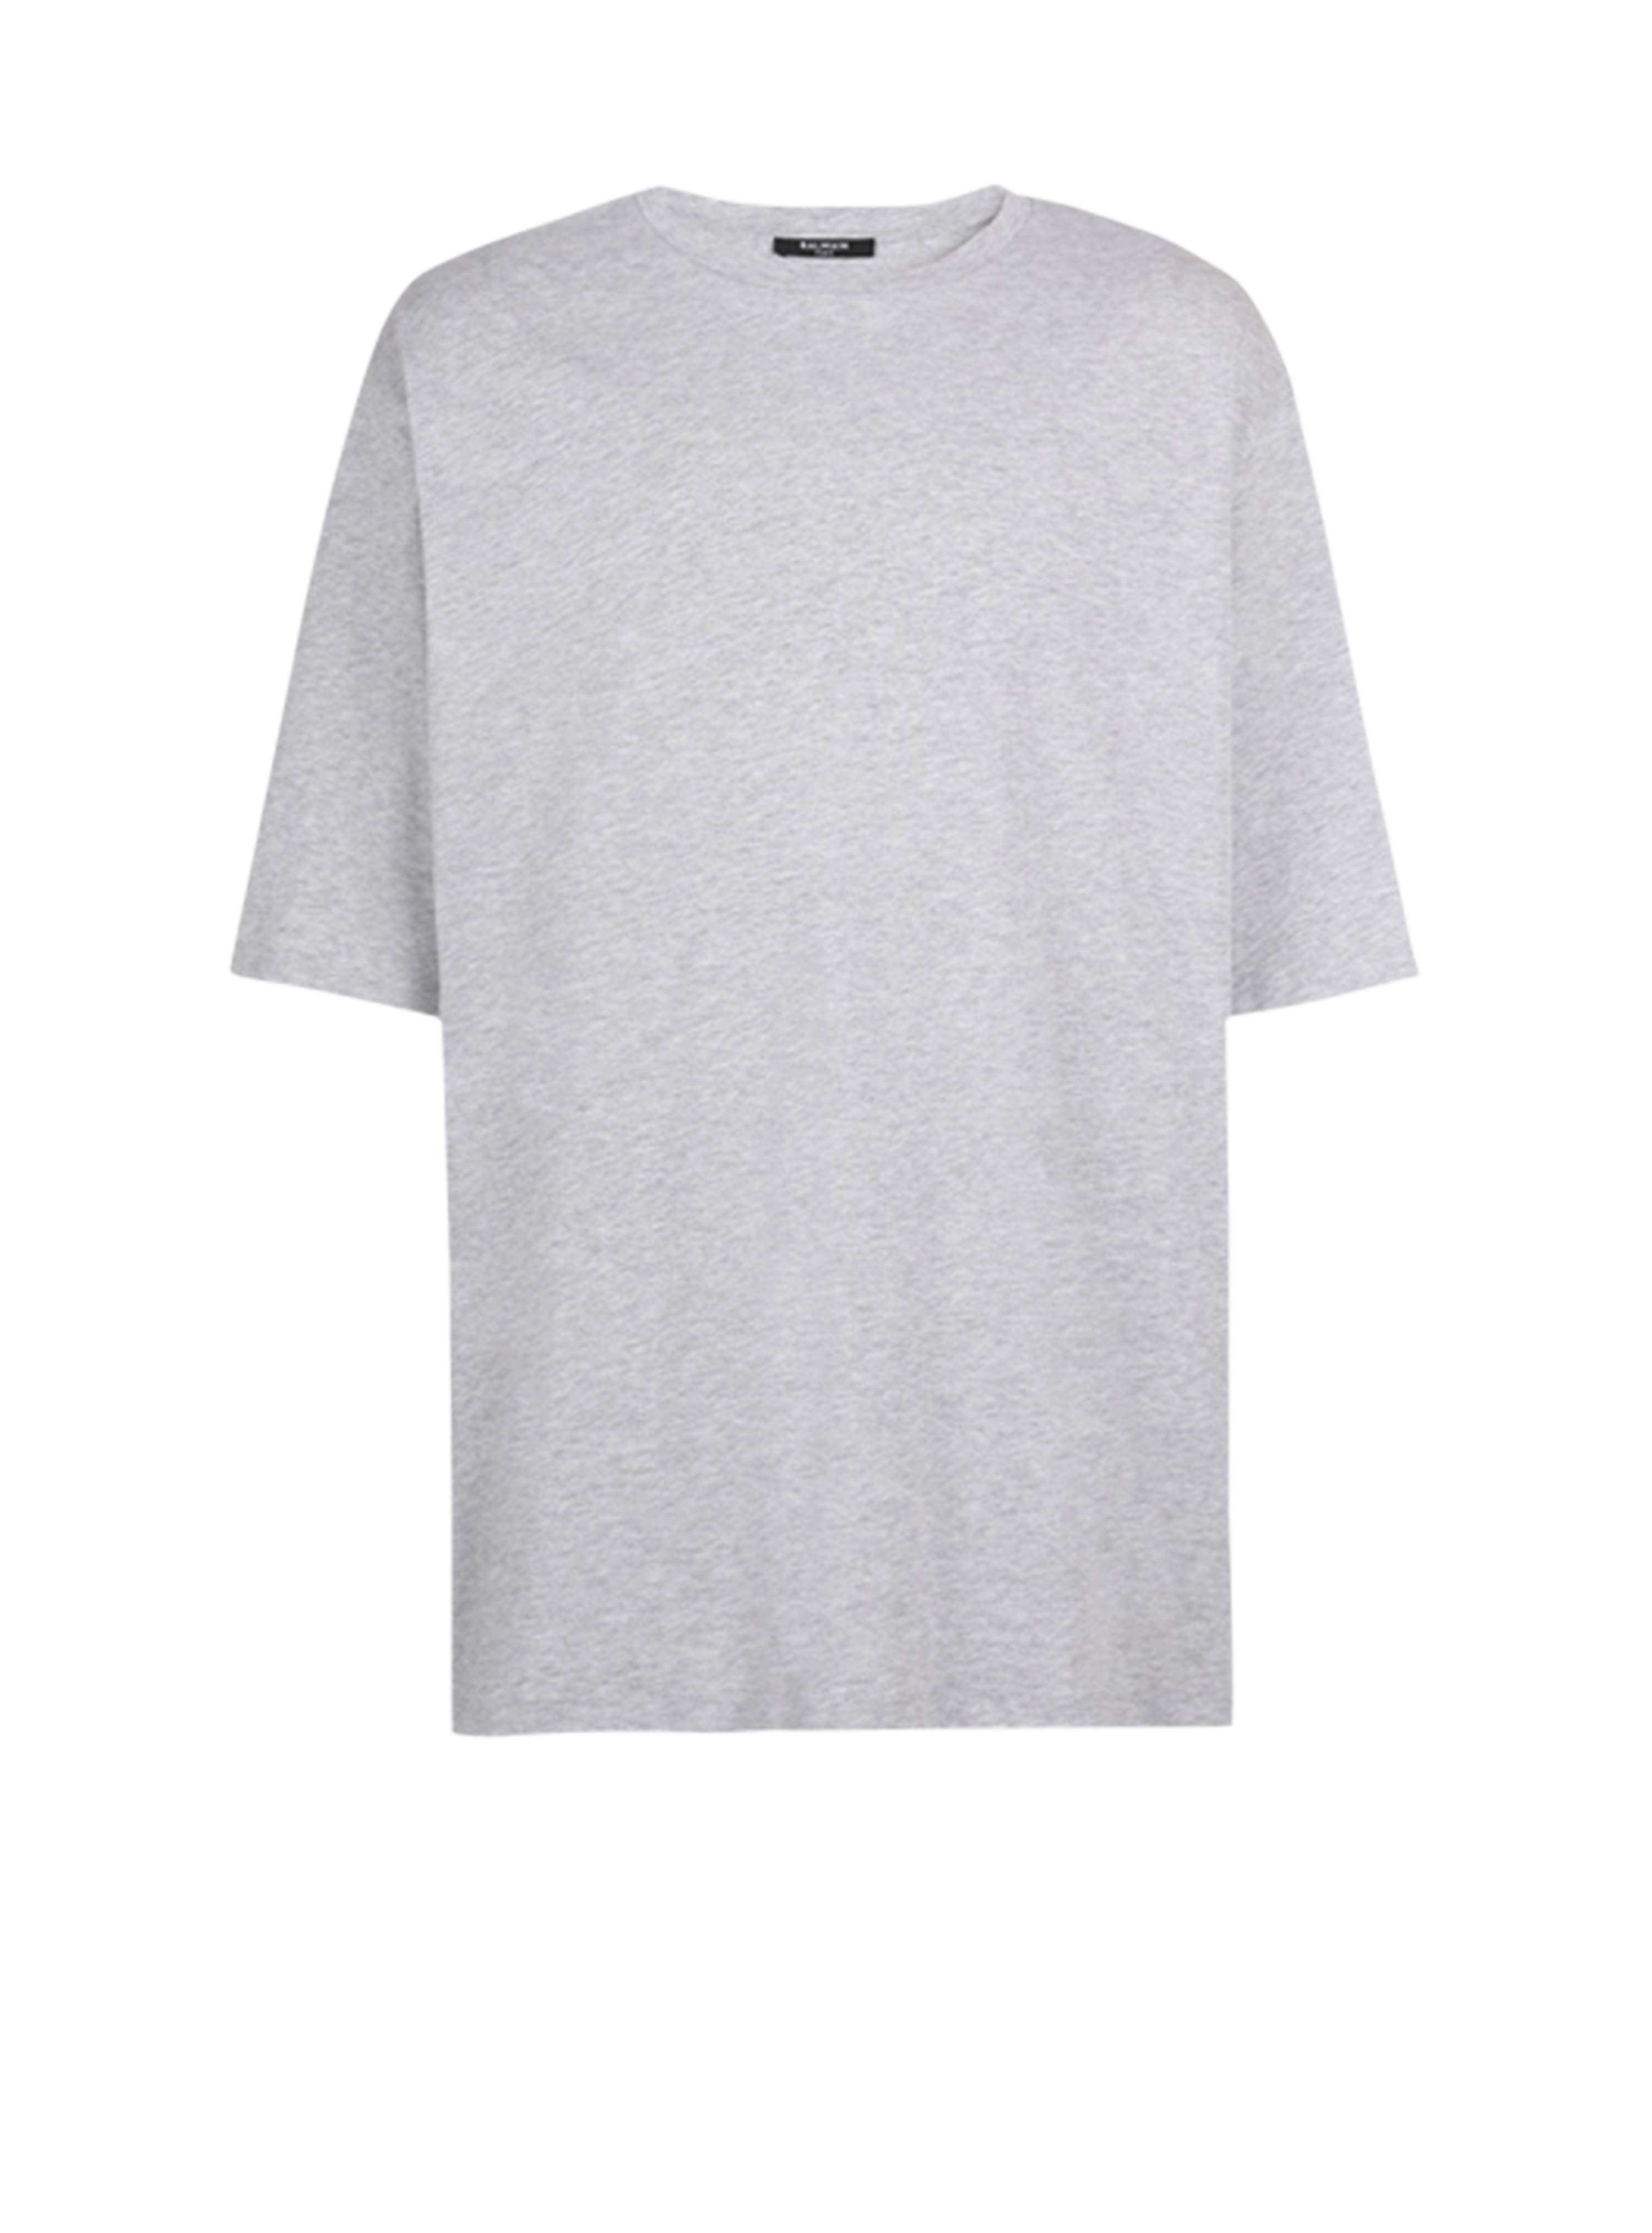 Oversized eco-designed cotton T-shirt with Balmain logo print, grey, hi-res